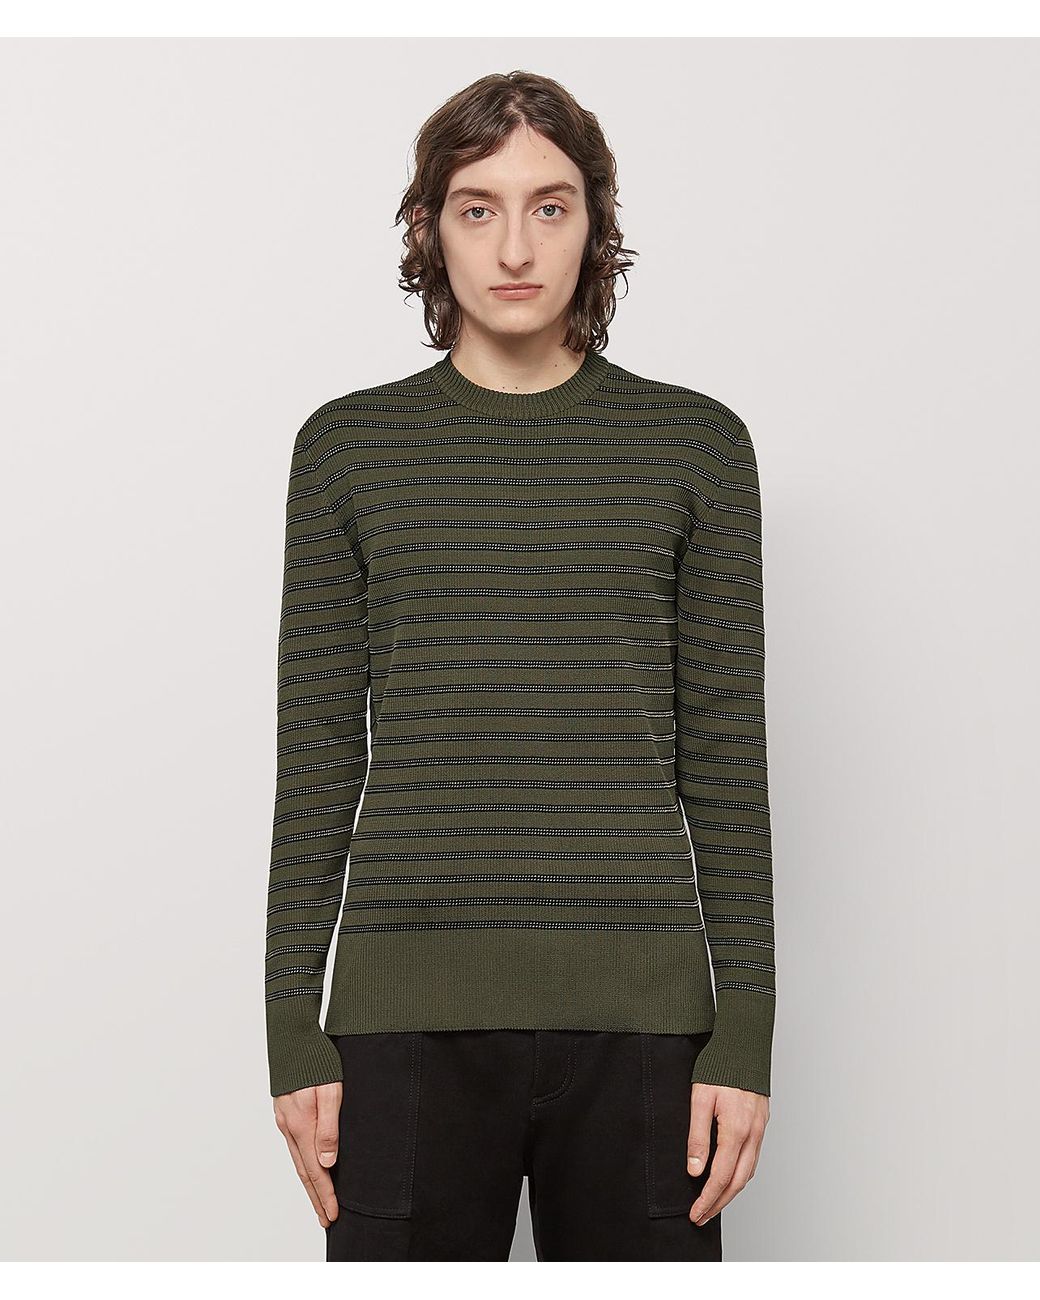 Bottega Veneta Sweater In Cotton in Green for Men - Lyst